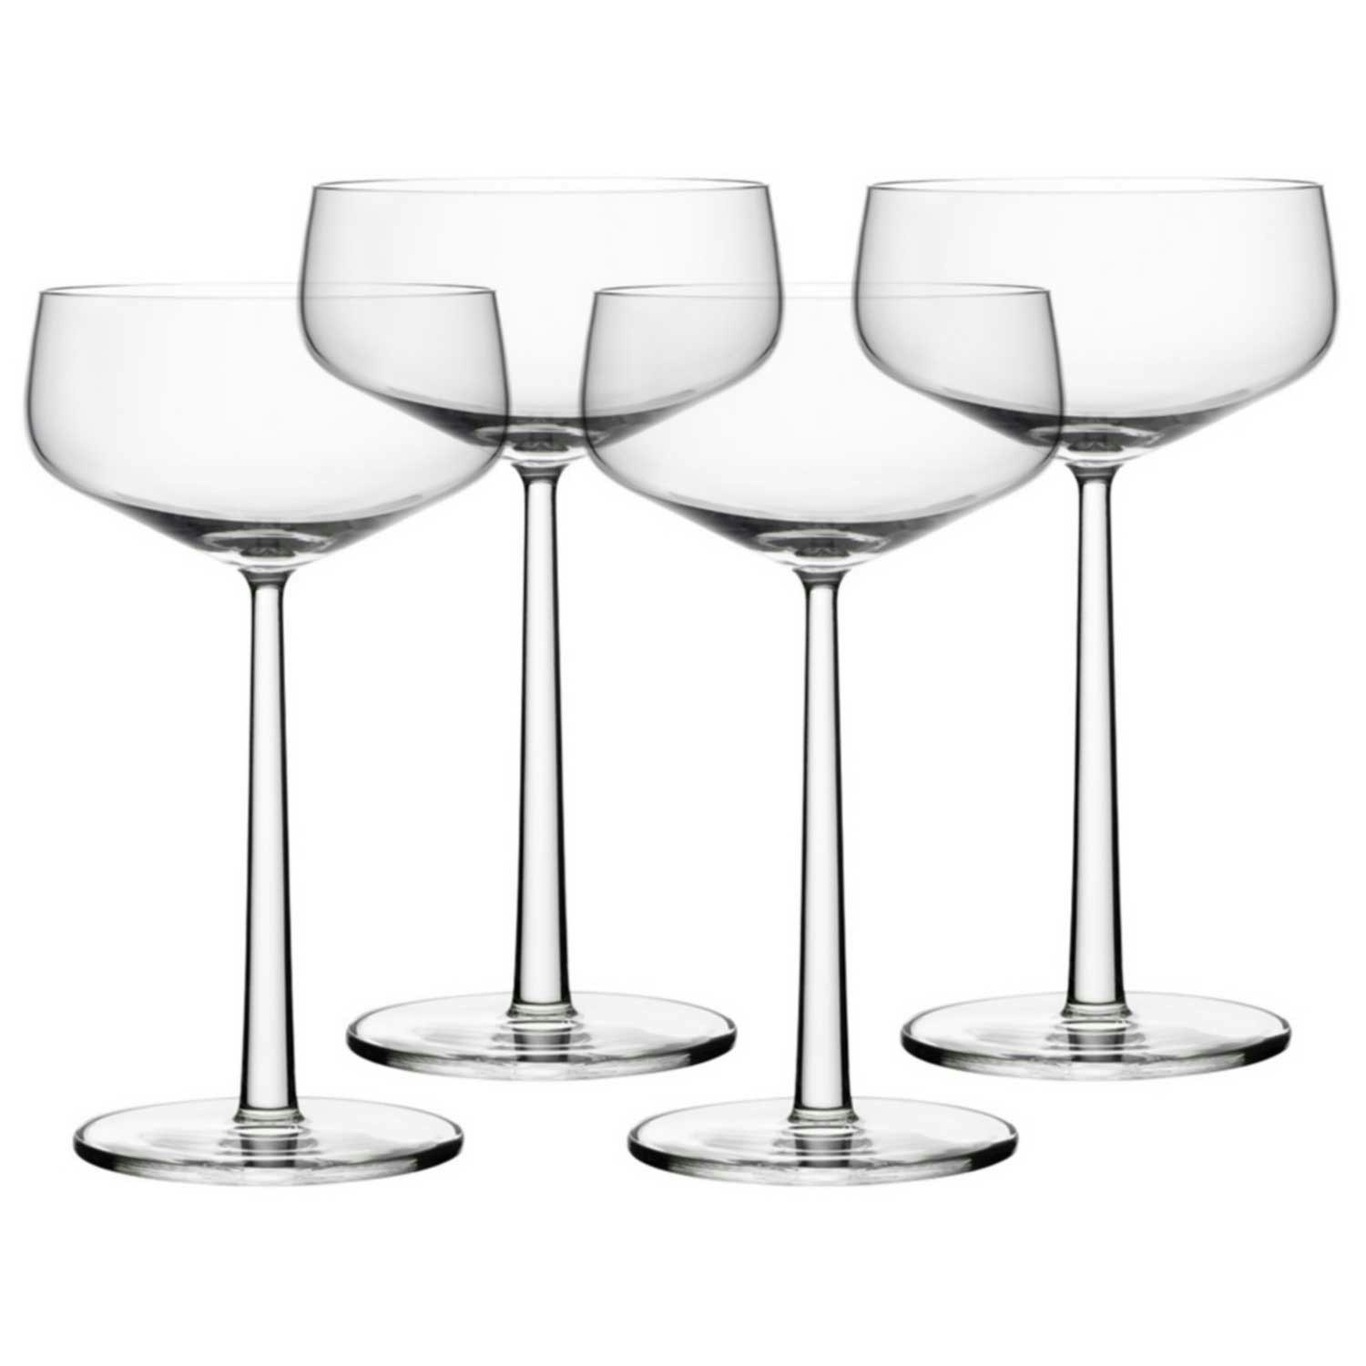 https://royaldesign.com/image/2/iittala-essence-cocktail-glass-31-cl-4-pcs-0?w=800&quality=80